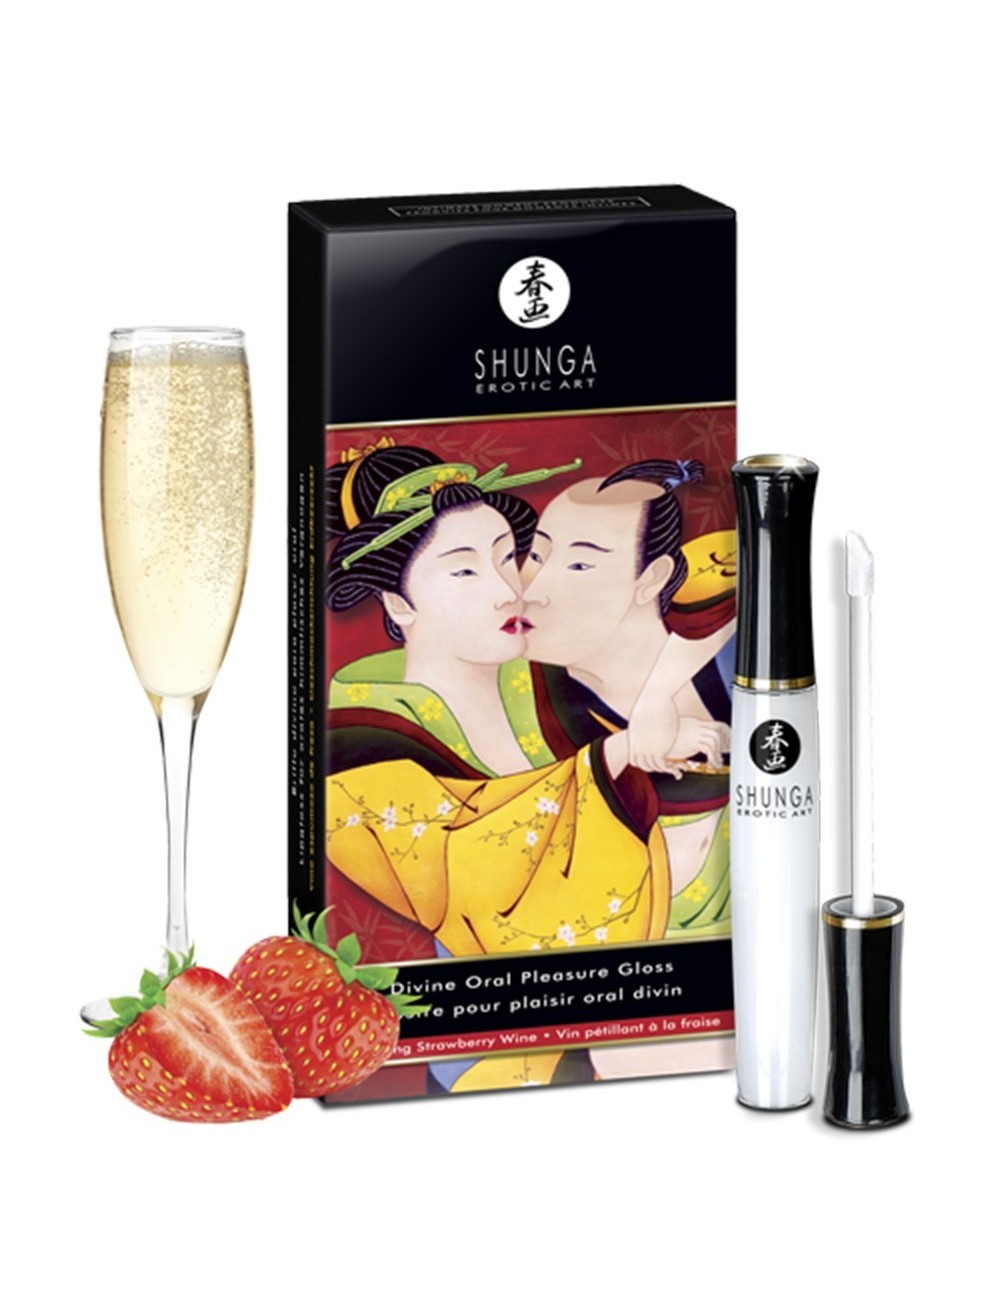 Gloss de plaisir oral fraise vin pétillant 10ml - CC817900 - Lubrifiants - Shunga